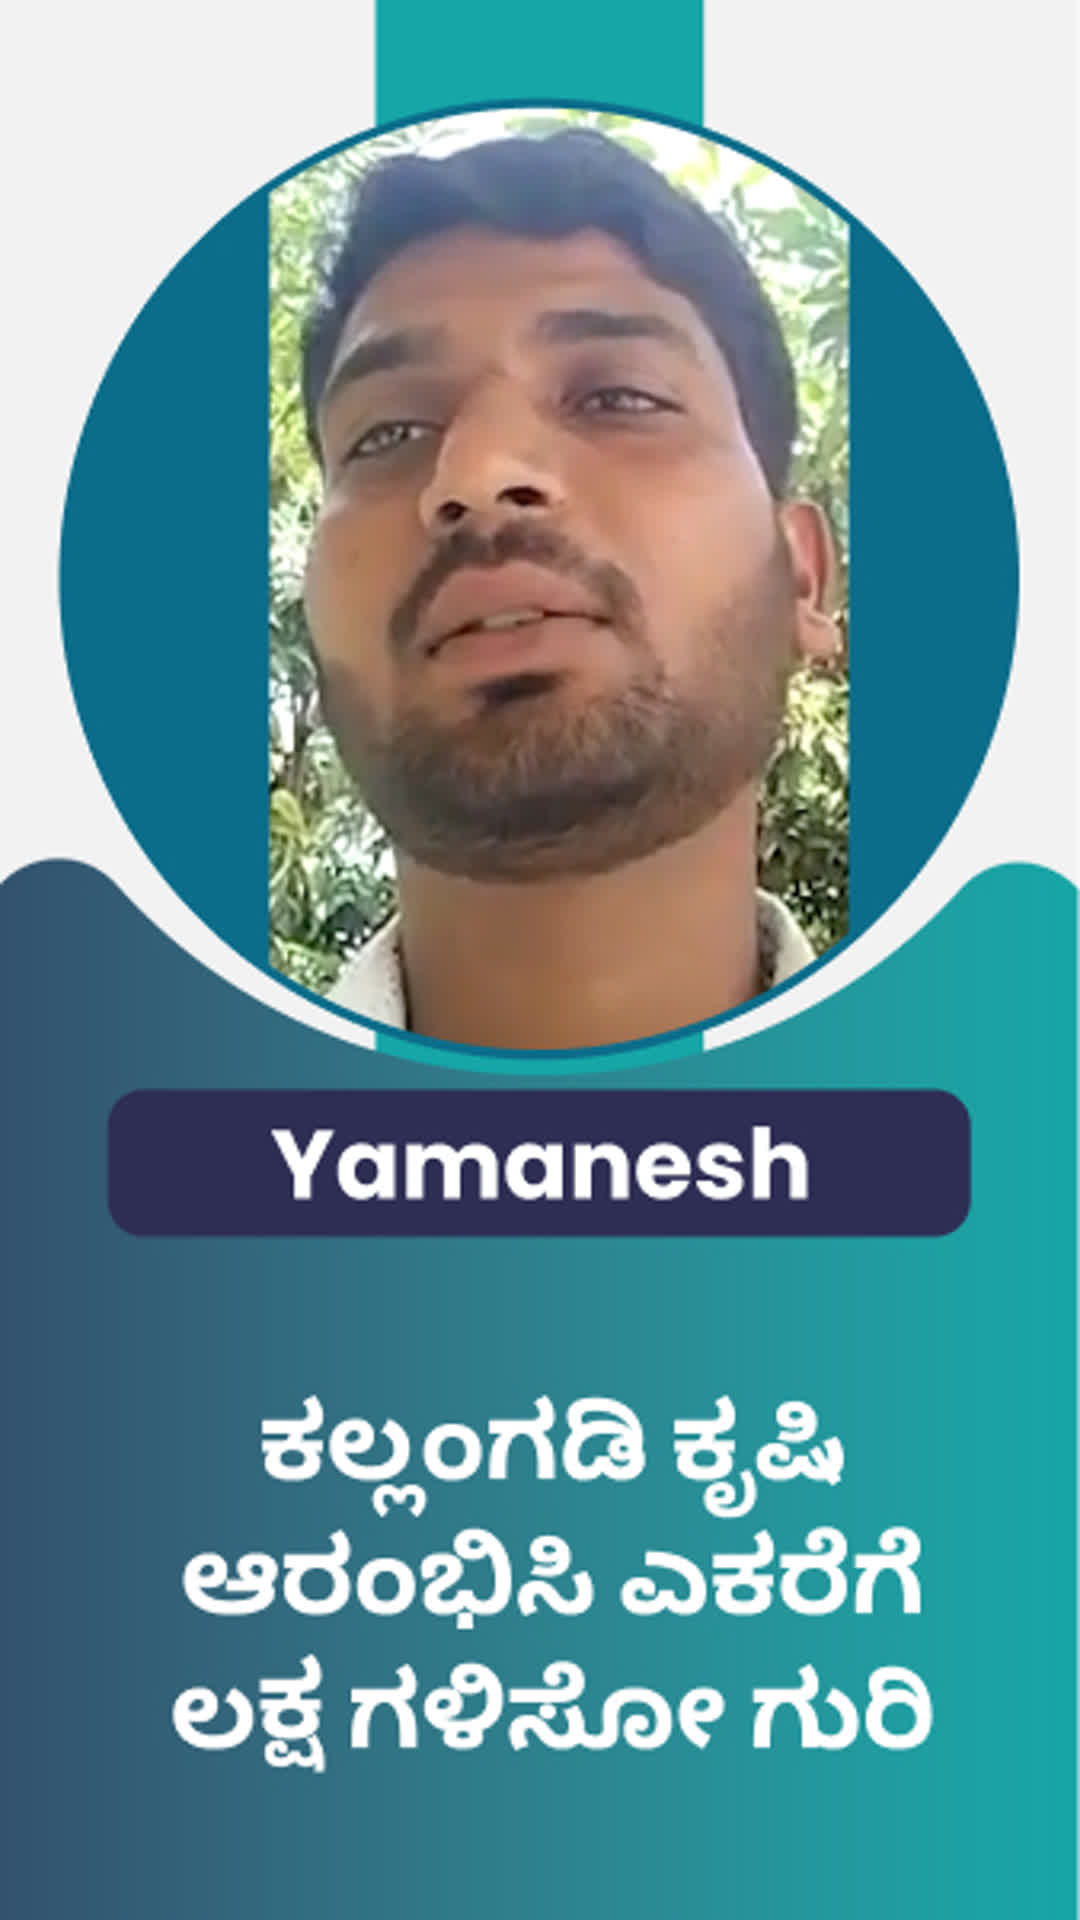 Yamanesh's Honest Review of ffreedom app - Kalaburagi ,Karnataka